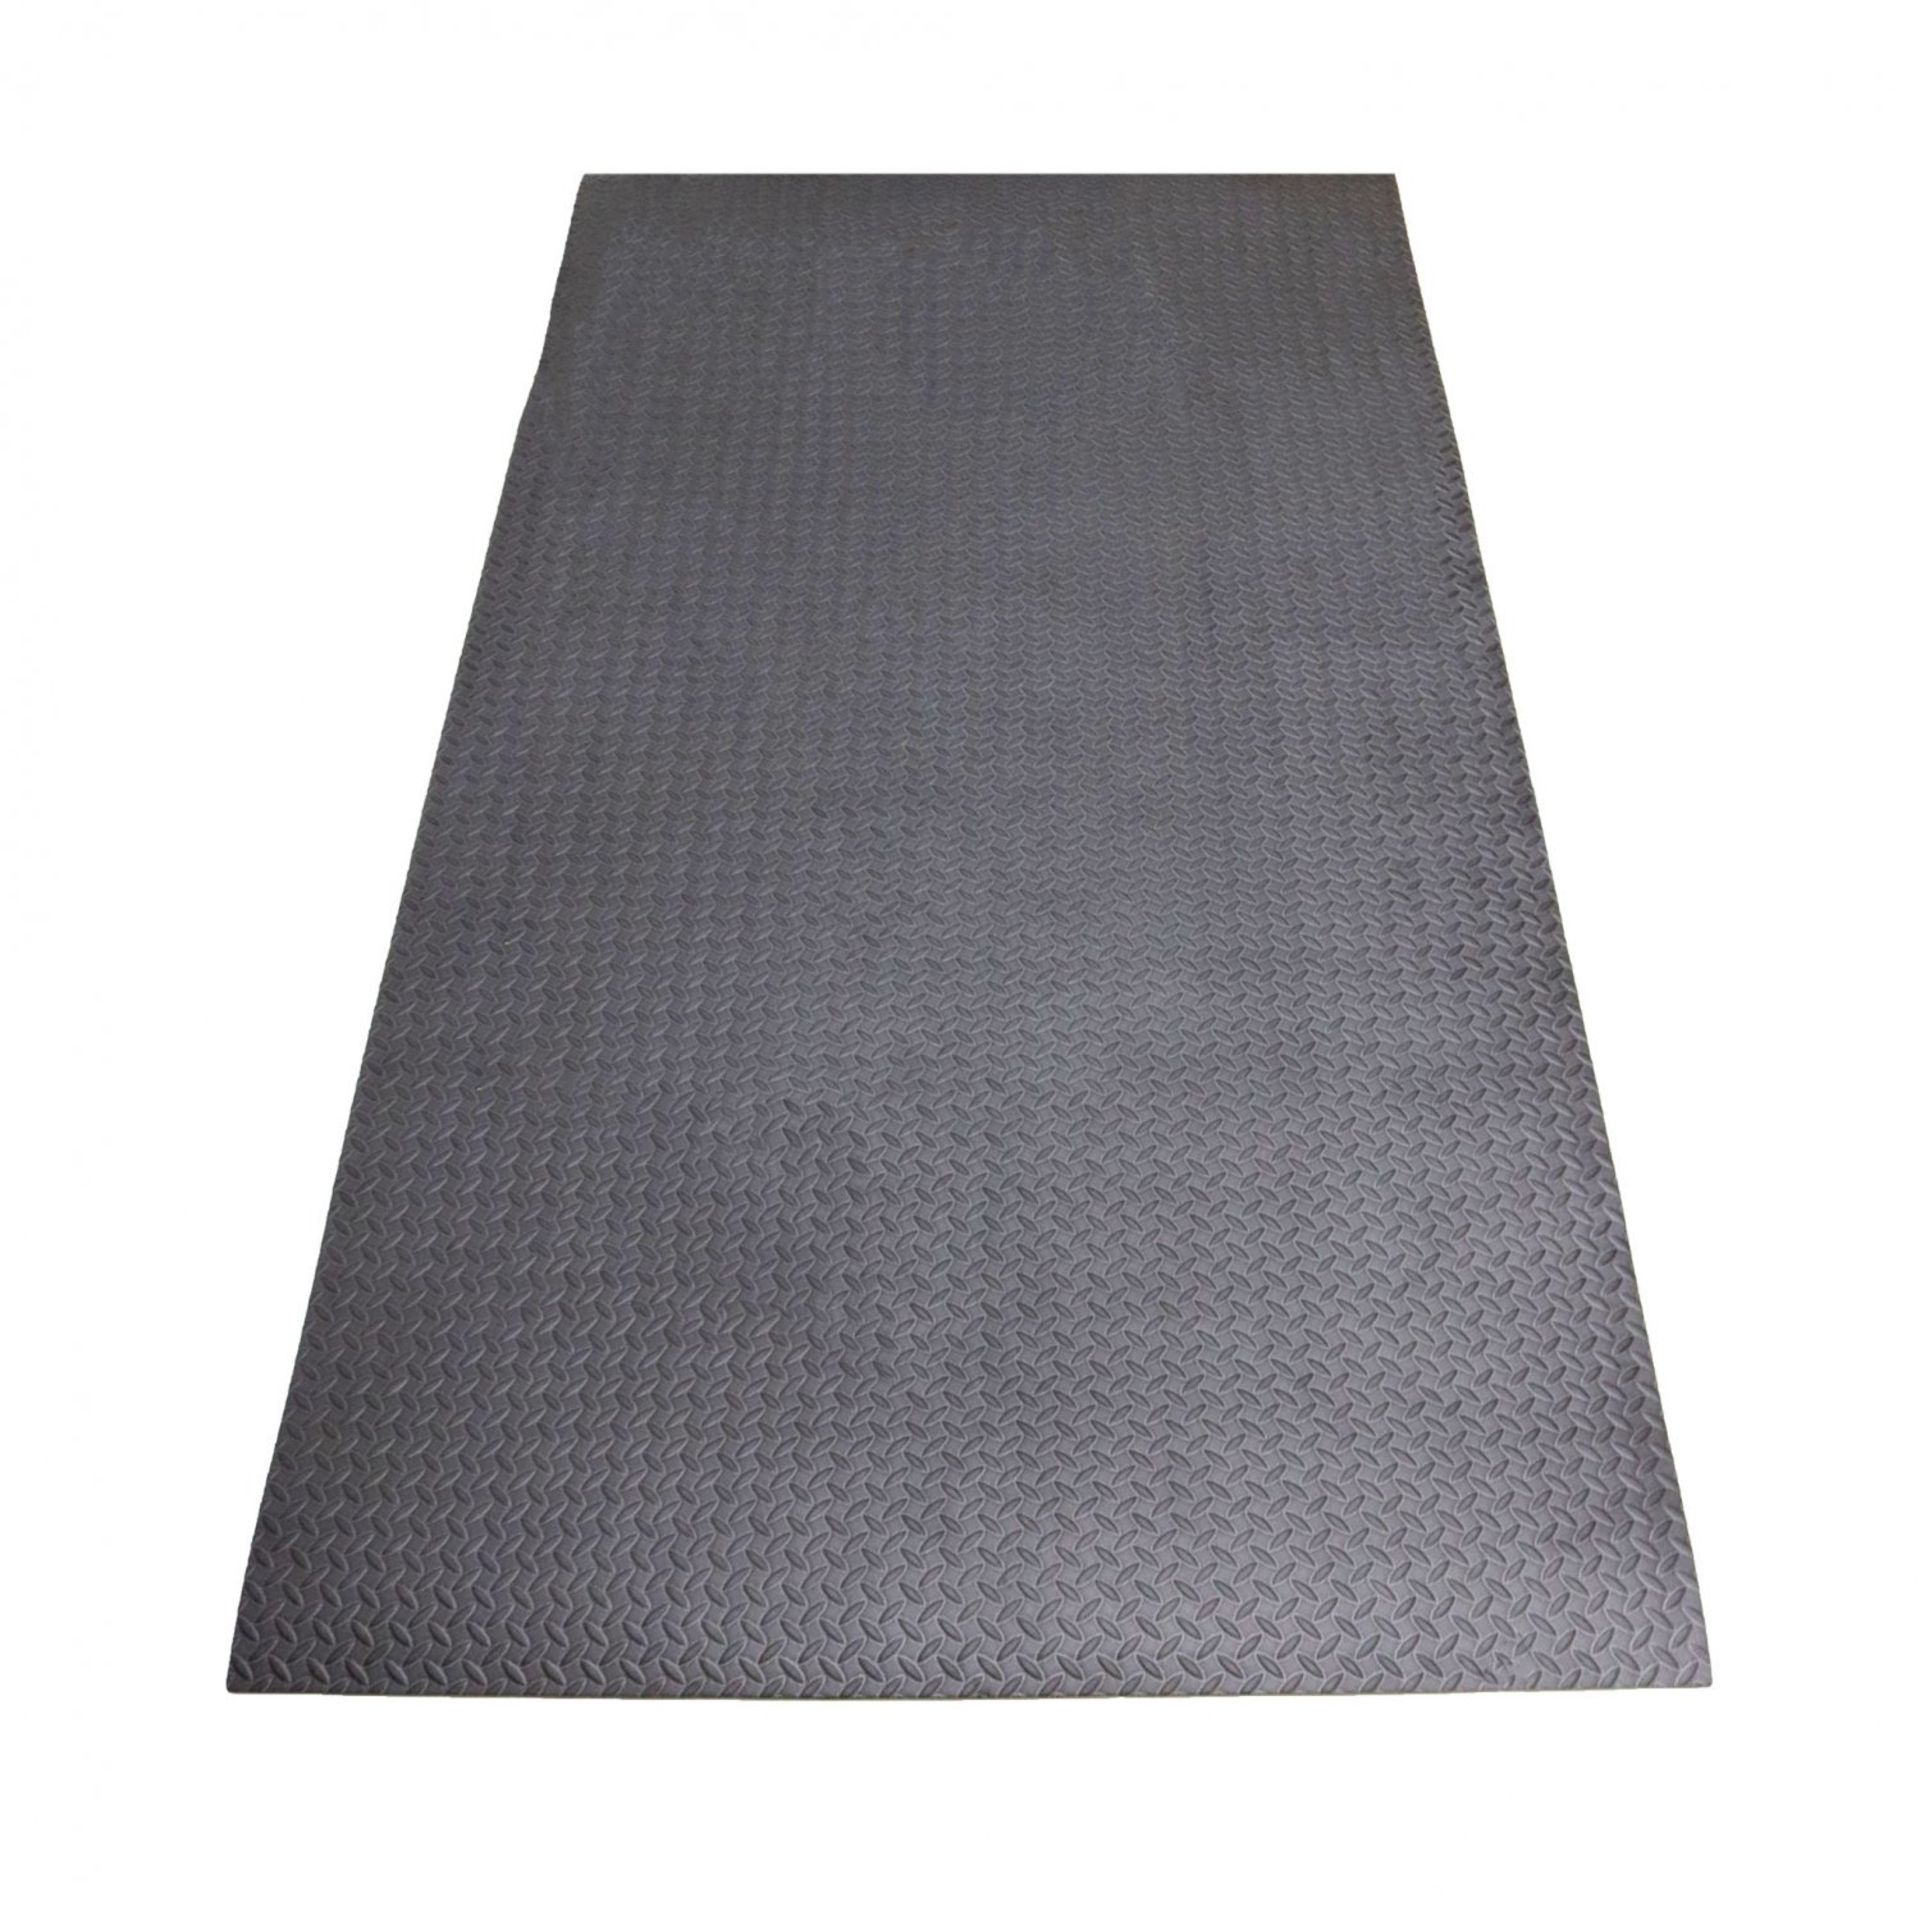 (Q130) Large Multi-Purpose Safety EVA Floor Mat Play Garage Gym Matting Dimensions: 233 x 118c...